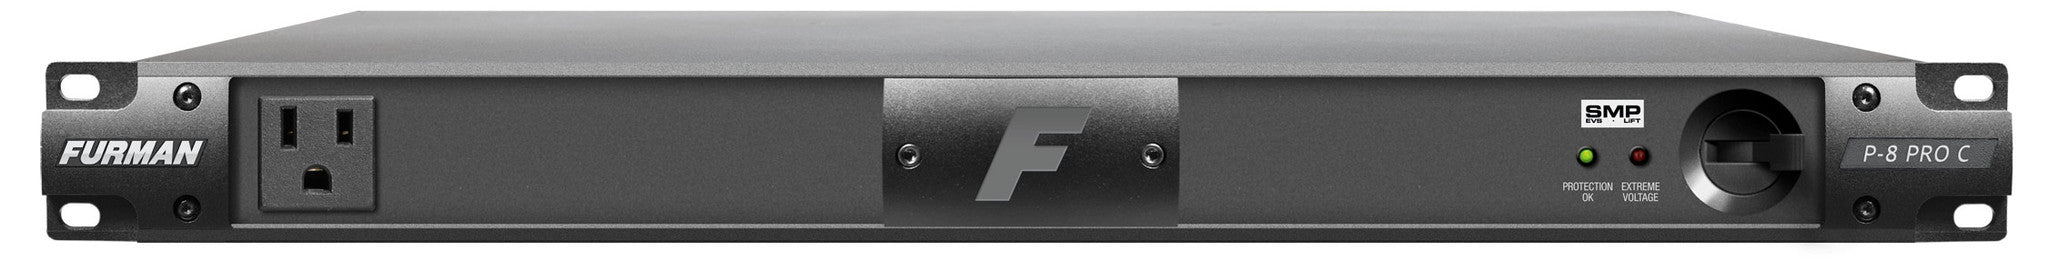 Accessories - Furman - Furman Sound P-8 PRO C - Professional Audio Design, Inc